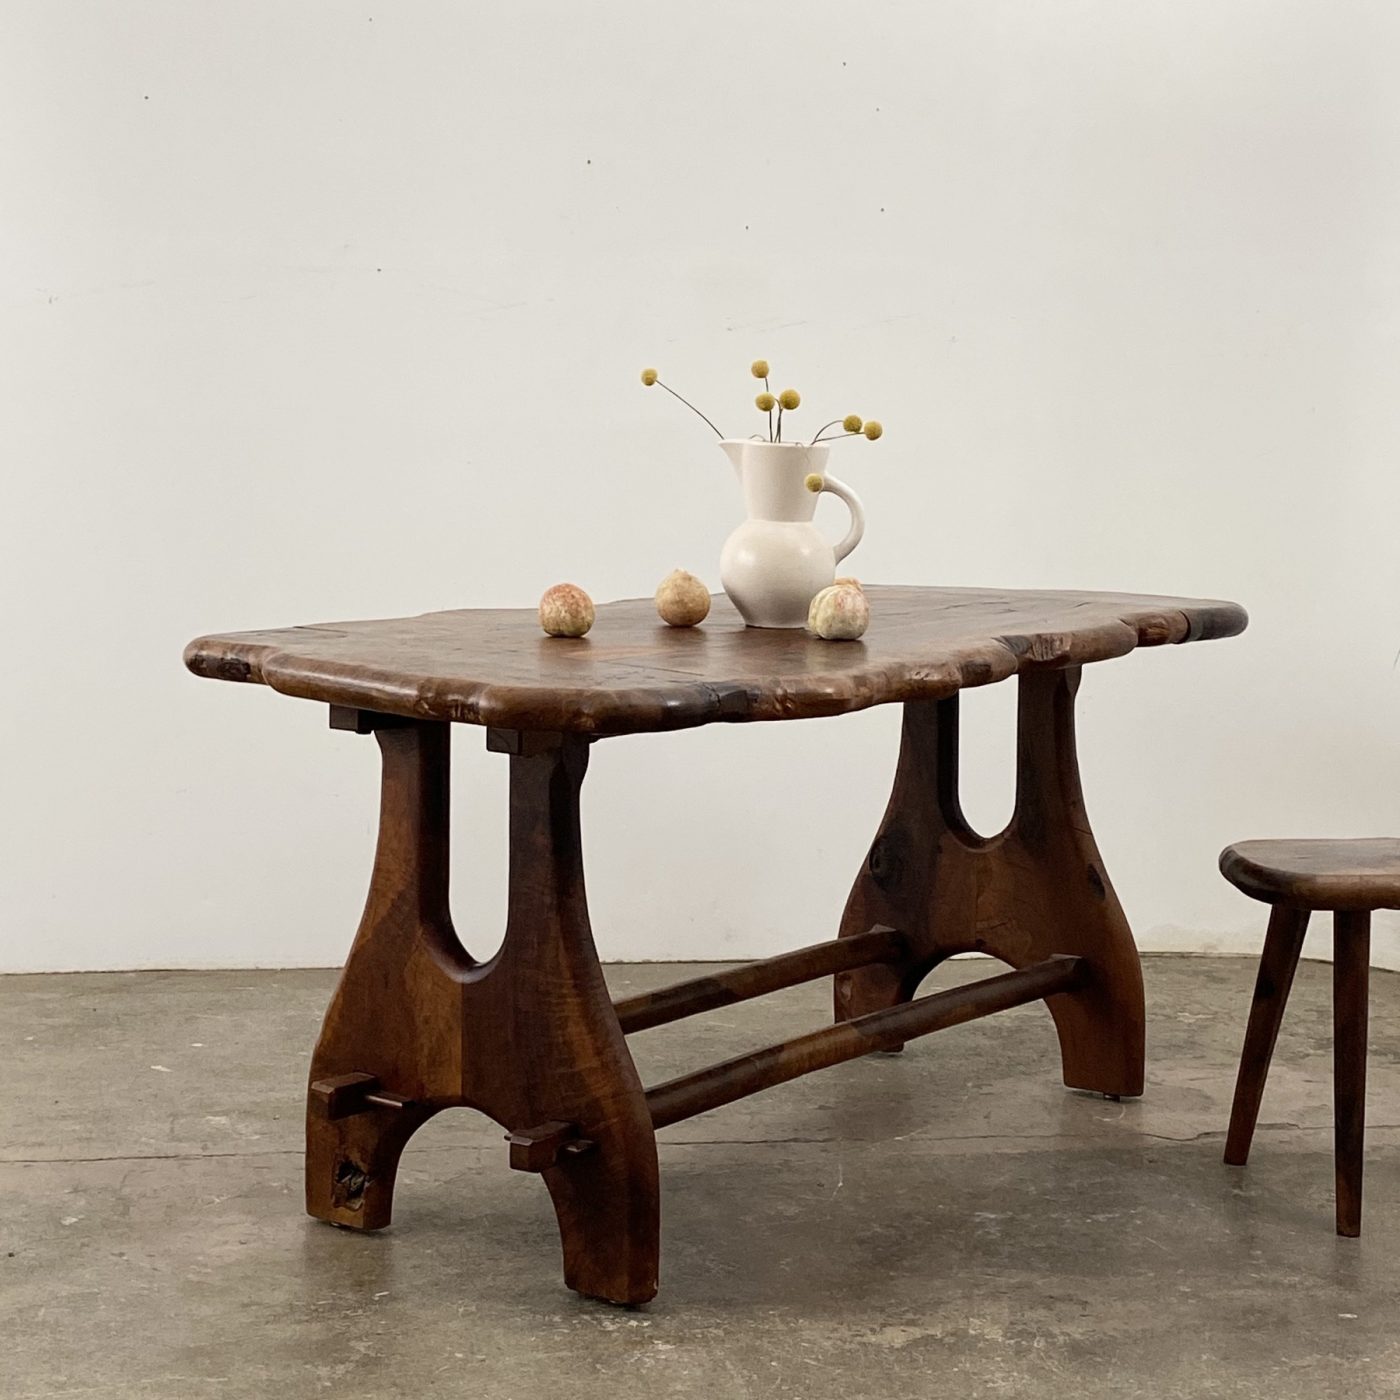 objet-vagabond-olive-table0004